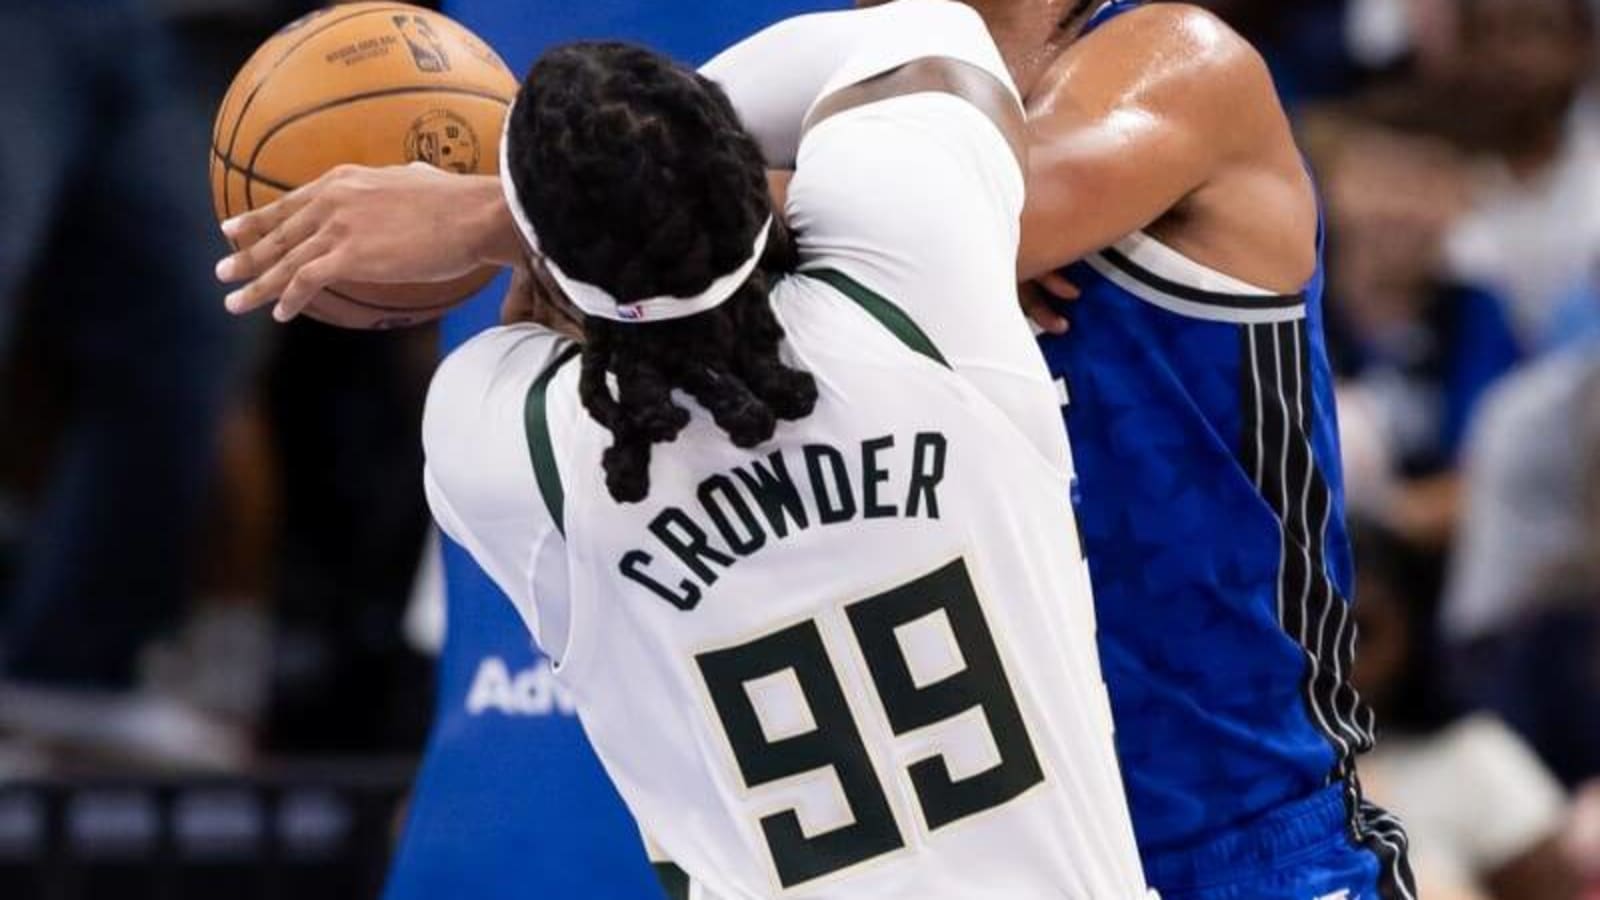 Jae Crowder believes his return can help shore up the Milwaukee Bucks’ inconsistent defense